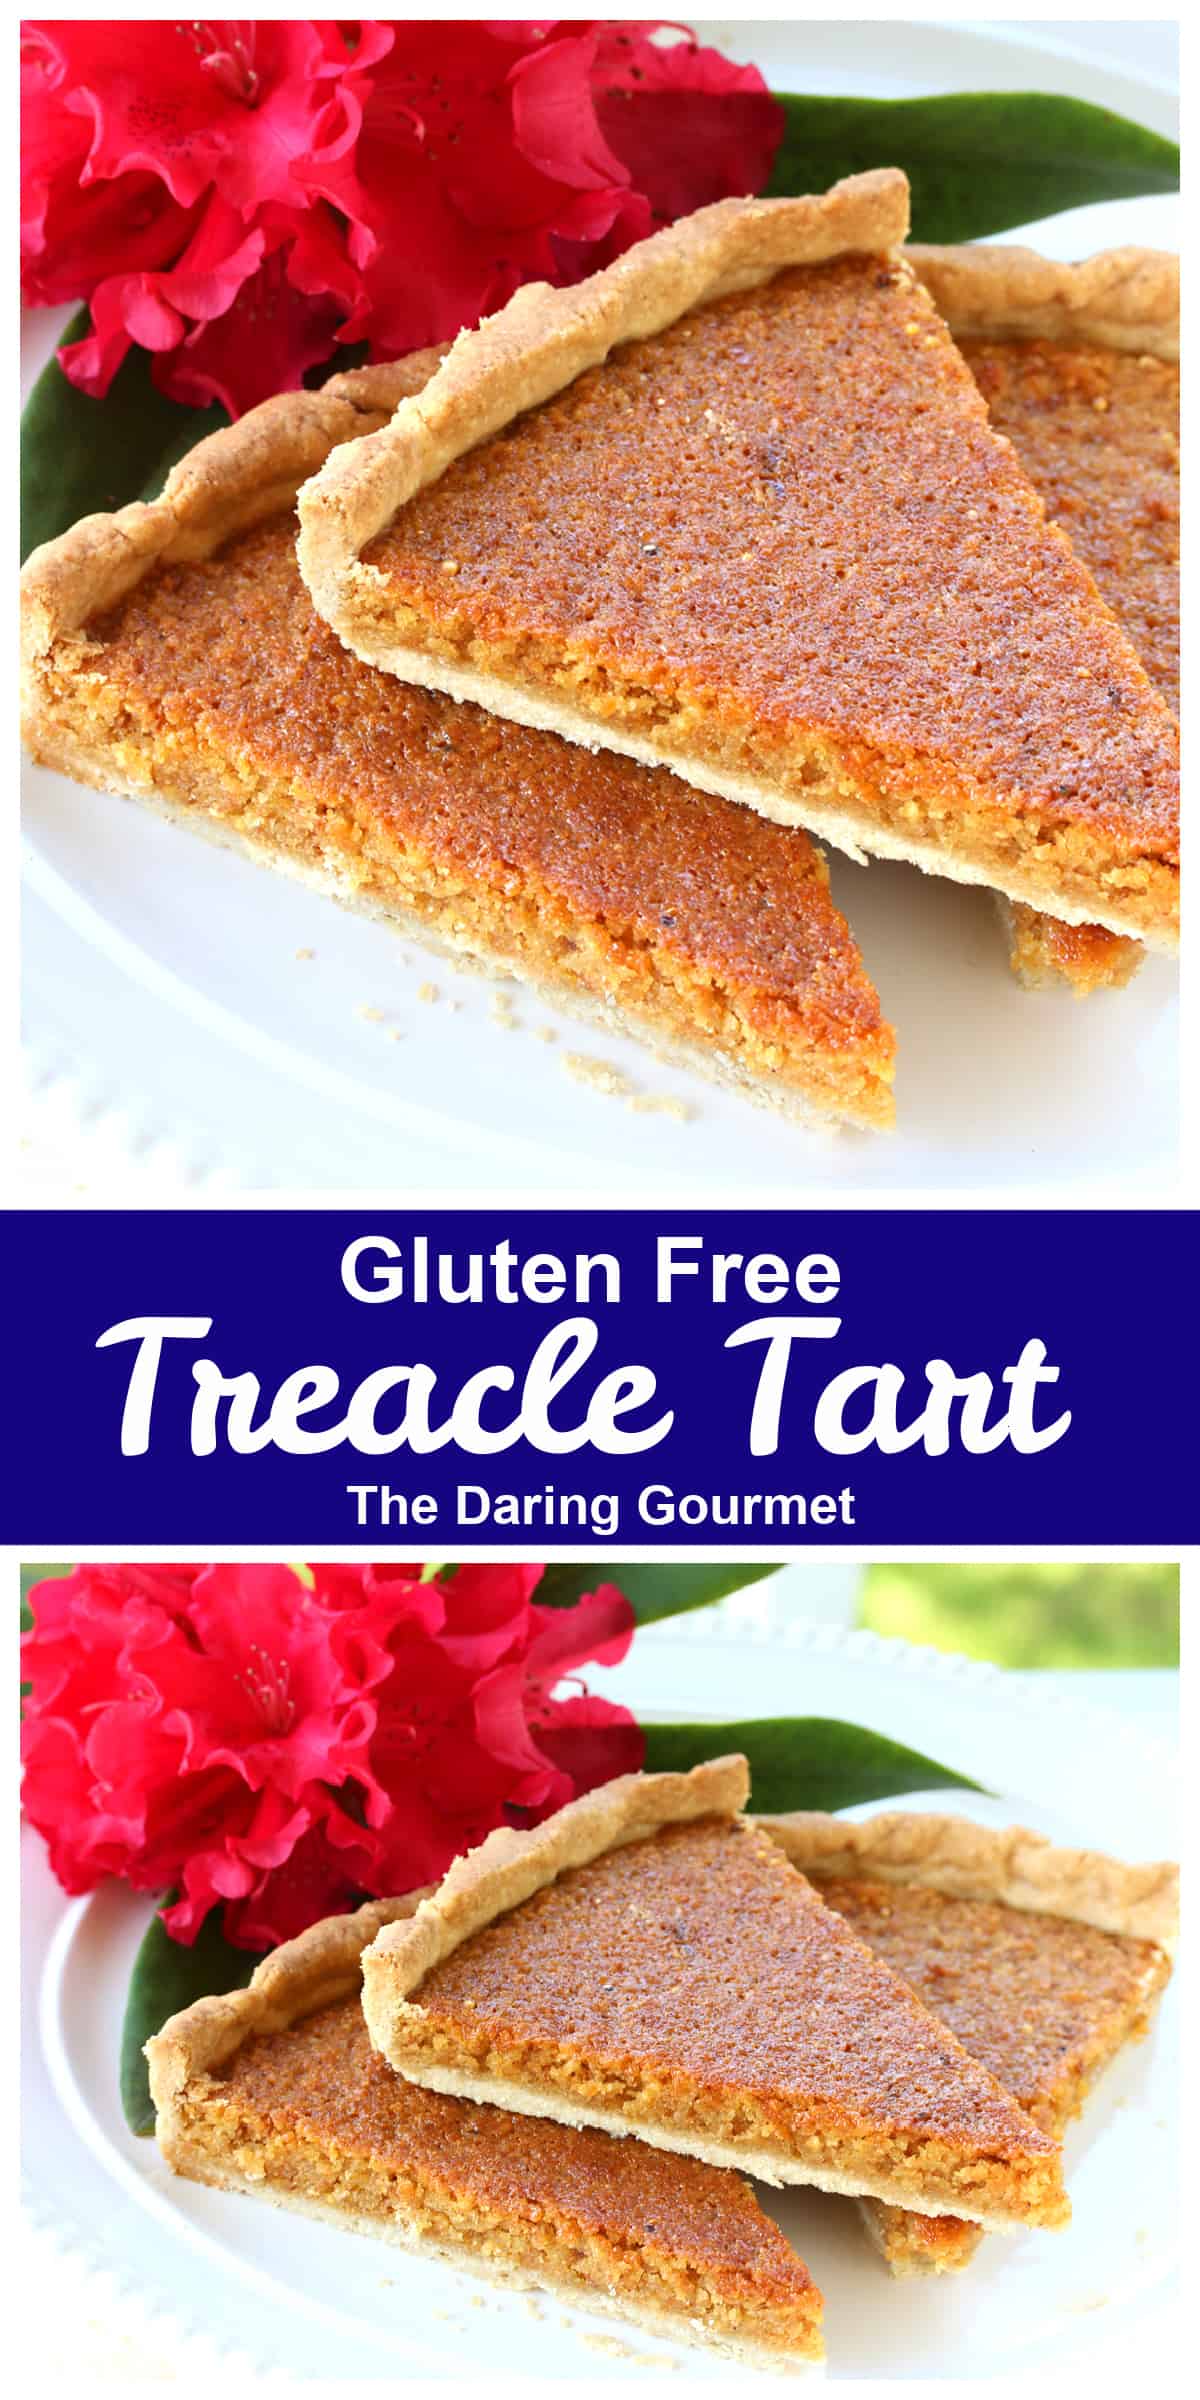 gluten free treacle tart recipe gf traditional British English golden syrup